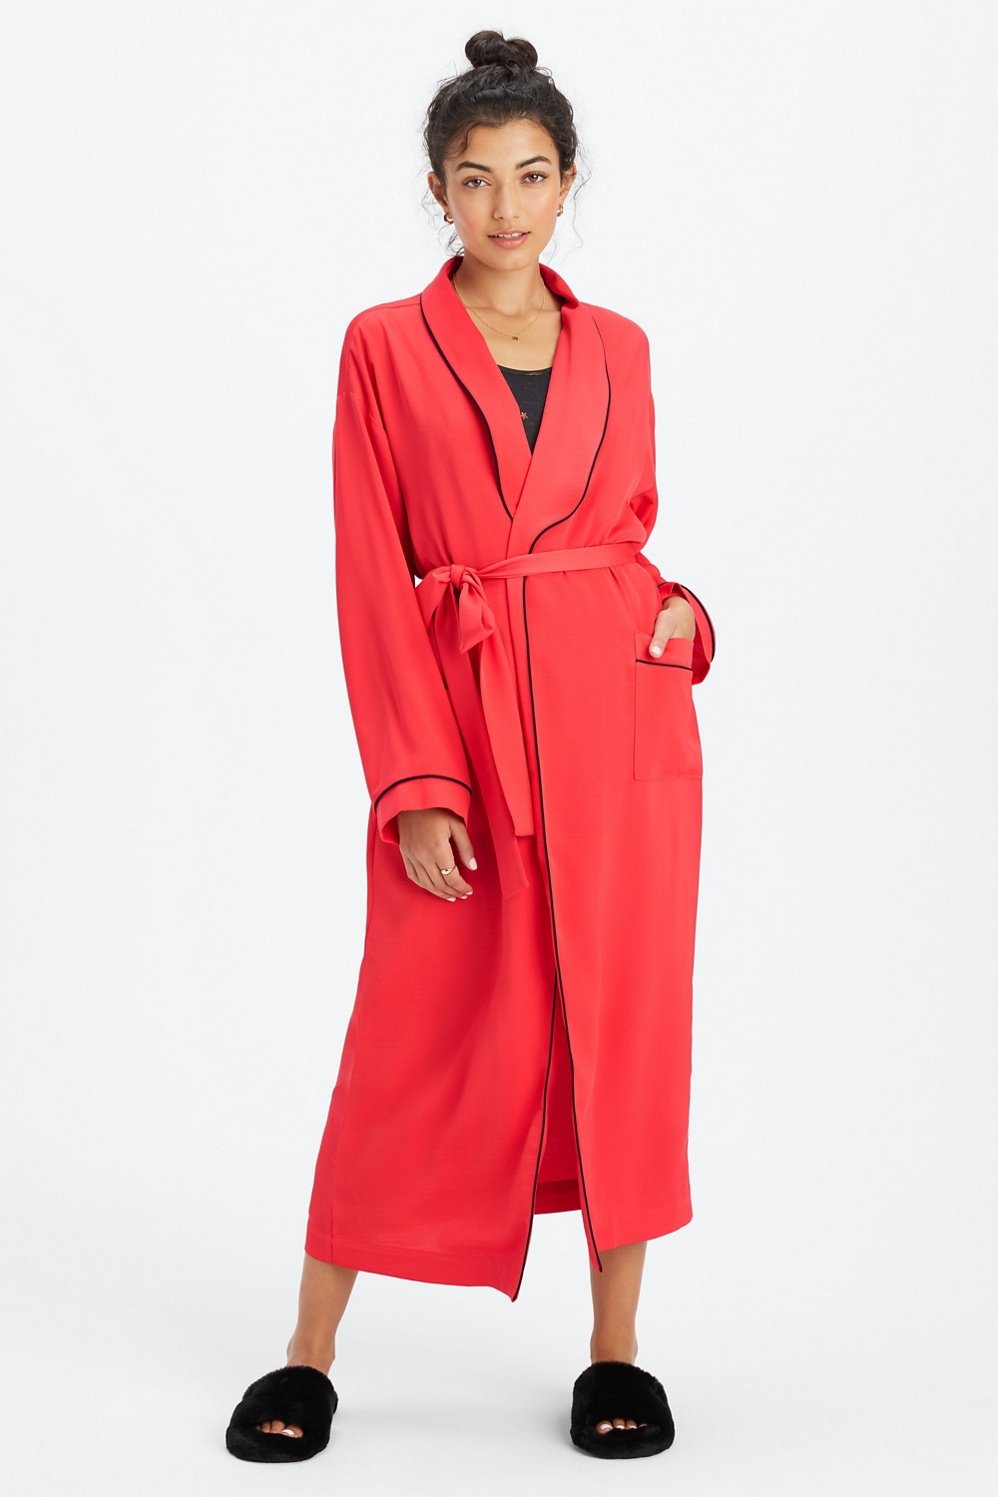 Women's robes on sale – shop online at ESOTIQ